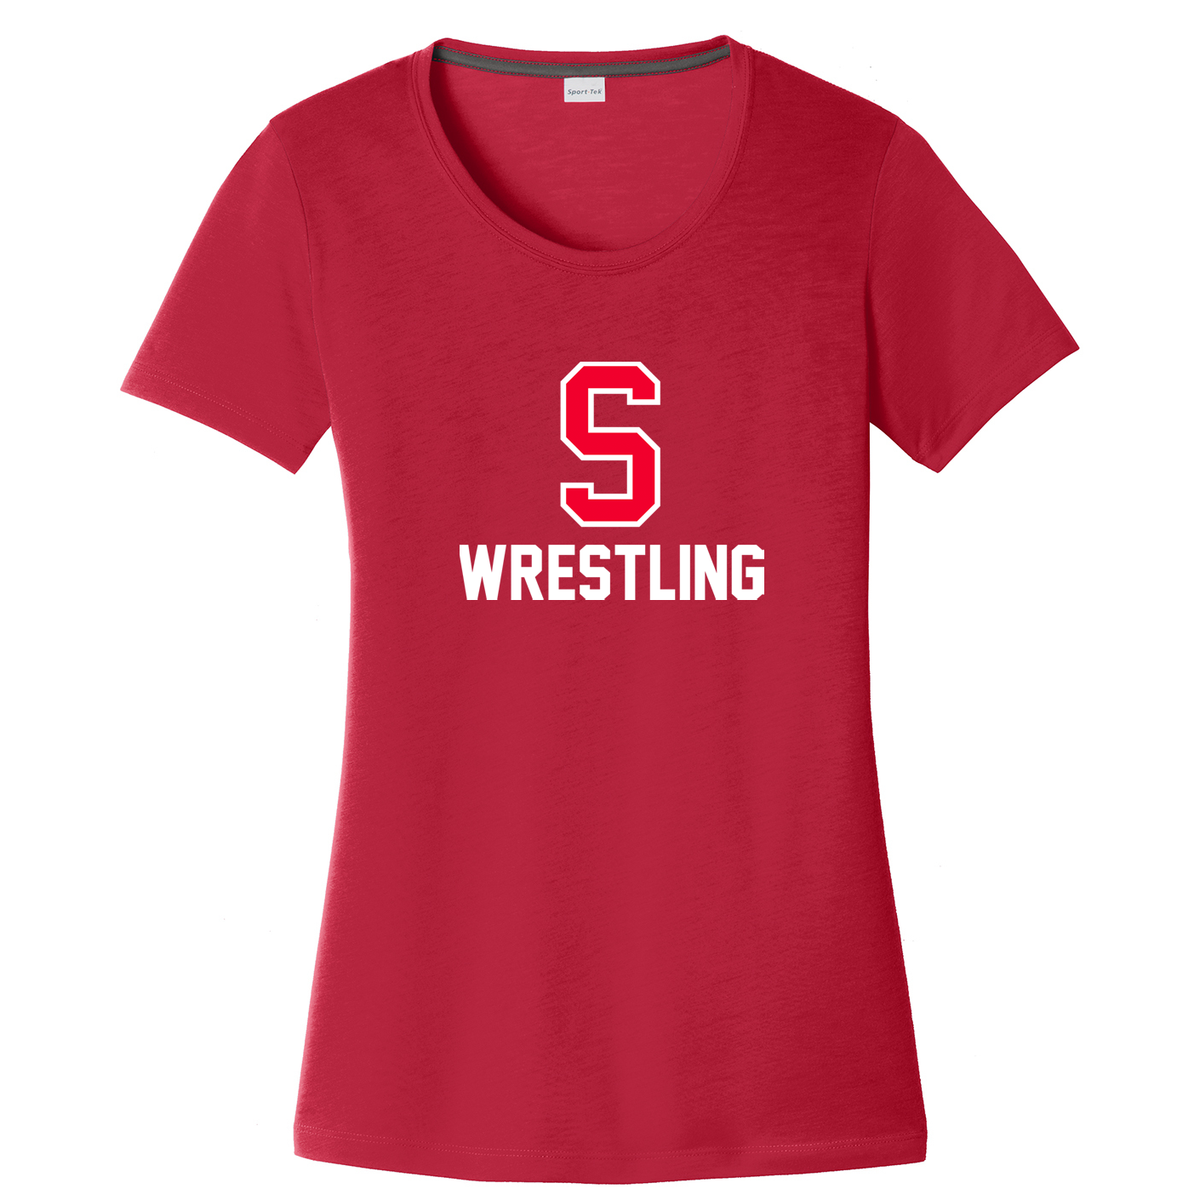 Syosset Wrestling Women's CottonTouch Performance T-Shirt